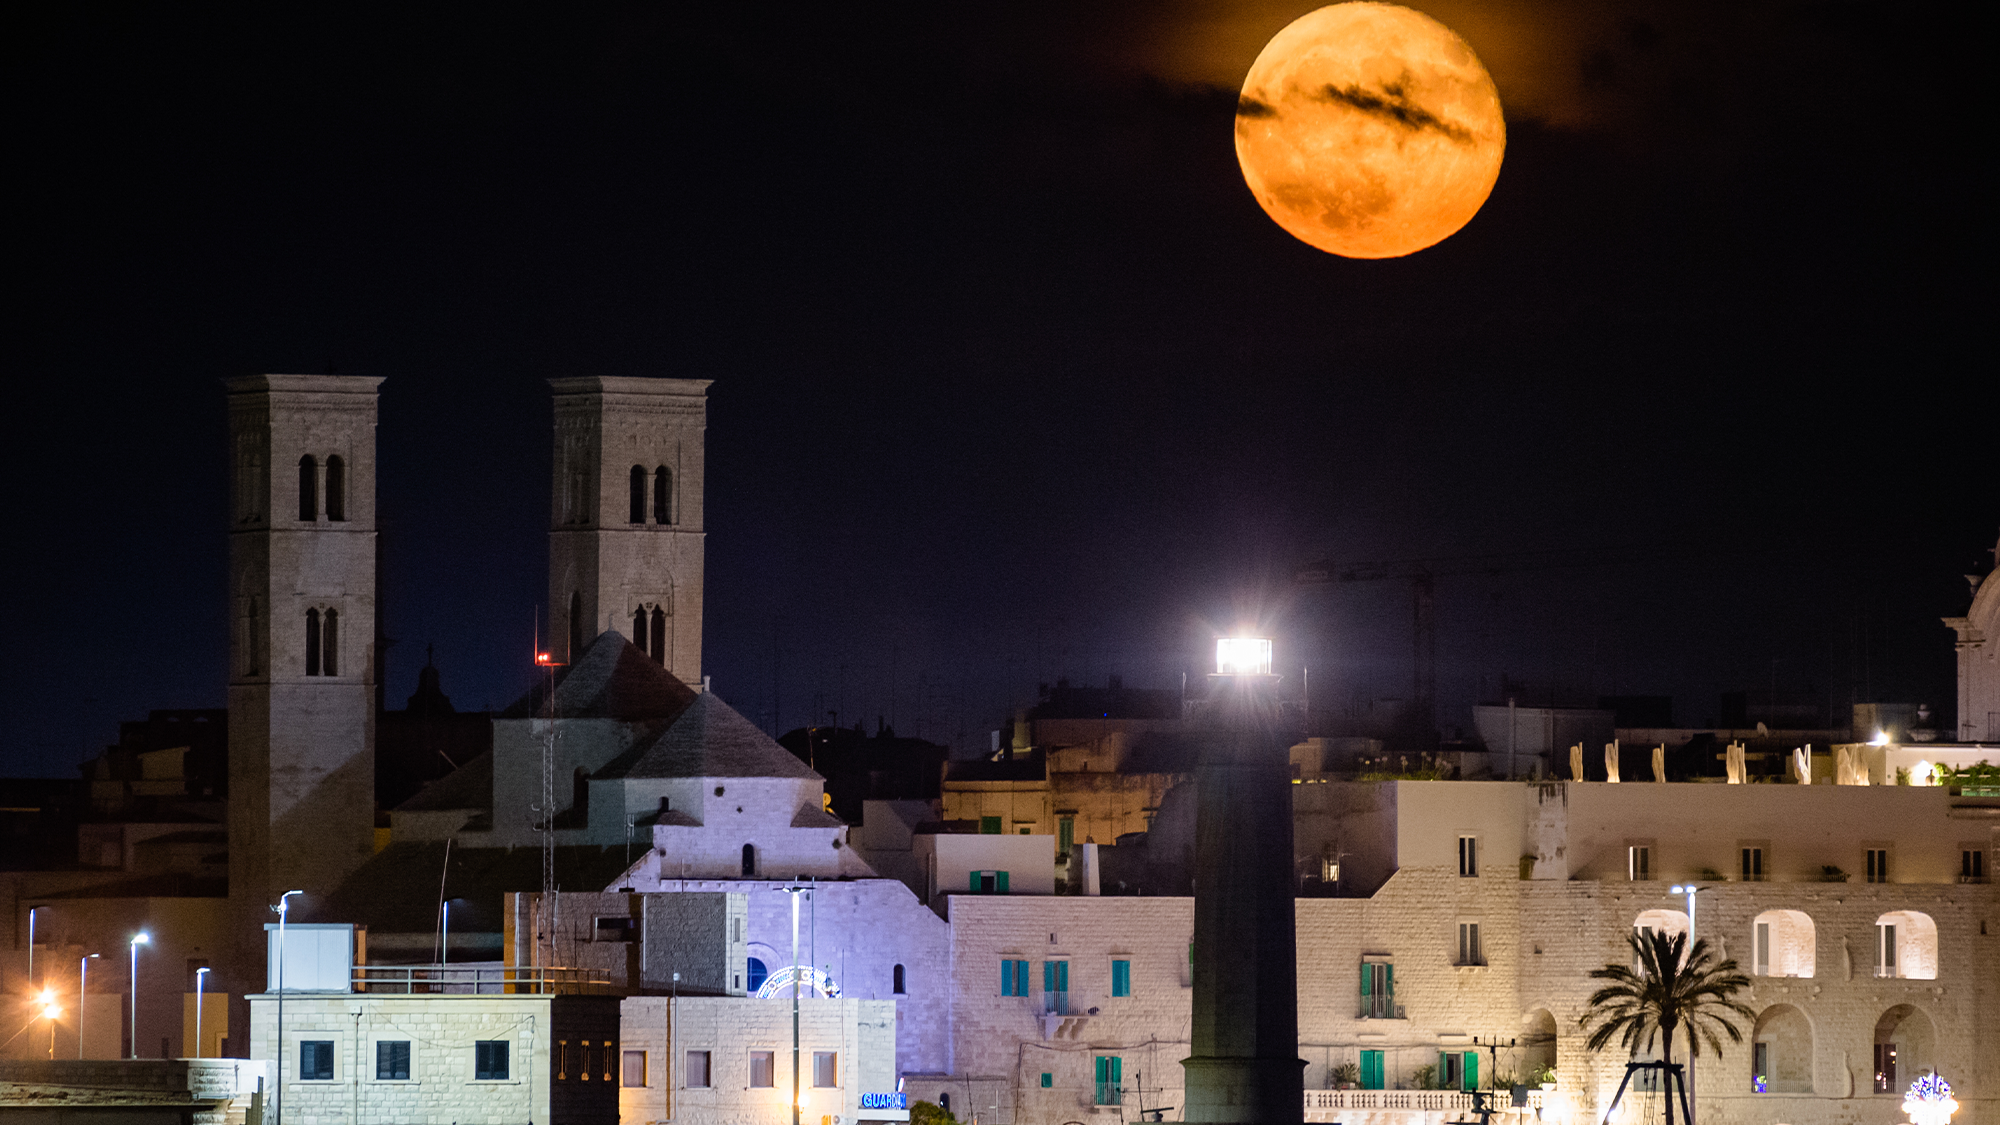 a fun moon rises over an italian city